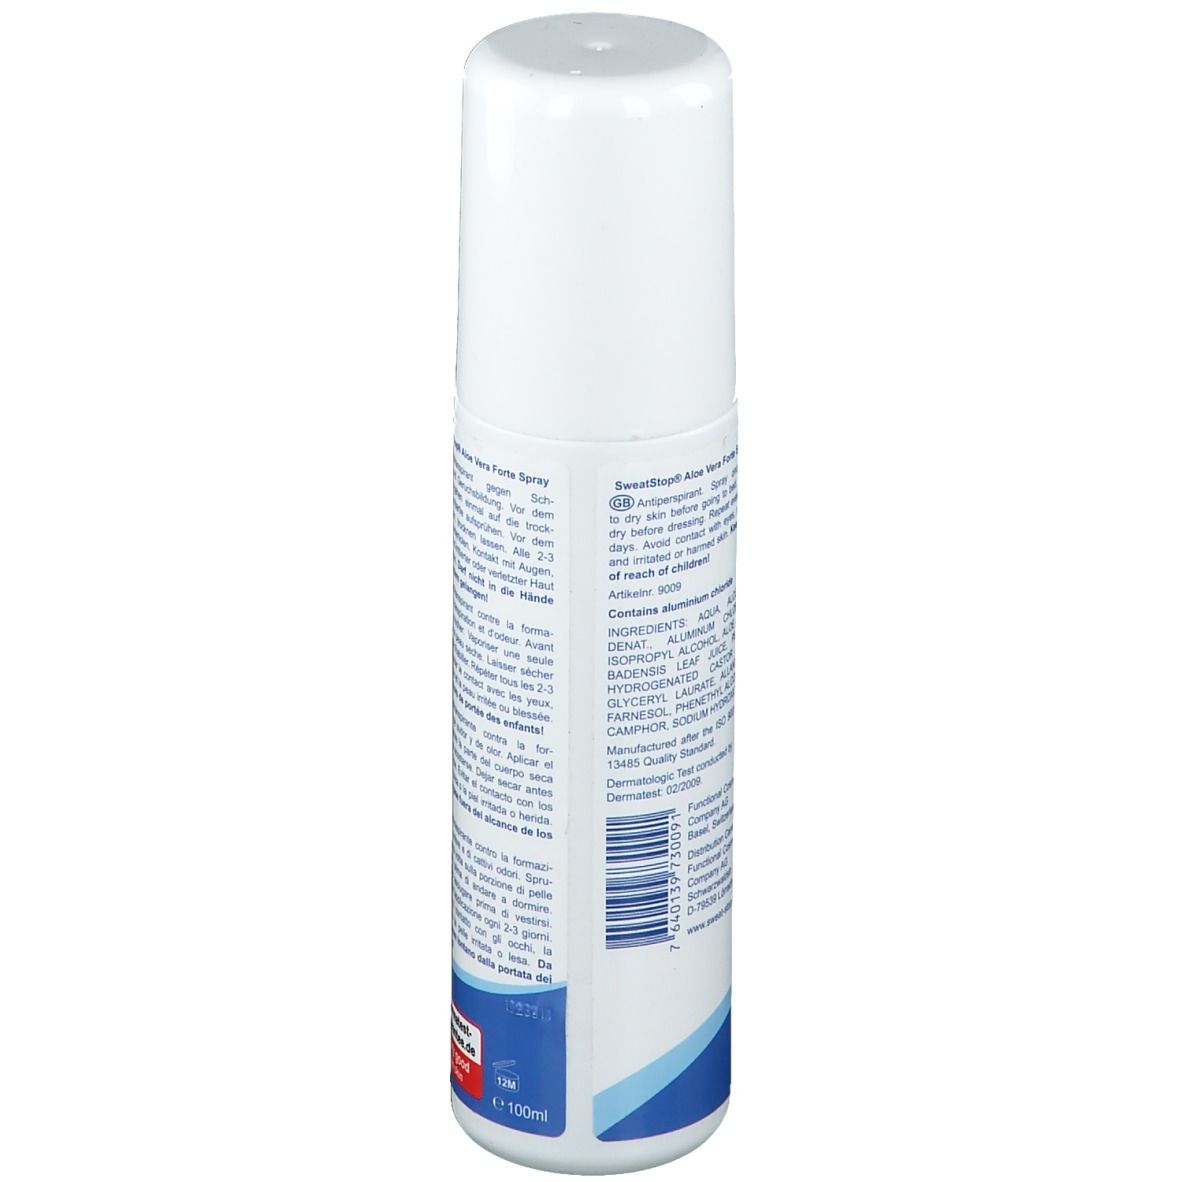 SweatStop® Aloe Vera Forte Spray antitranspirant